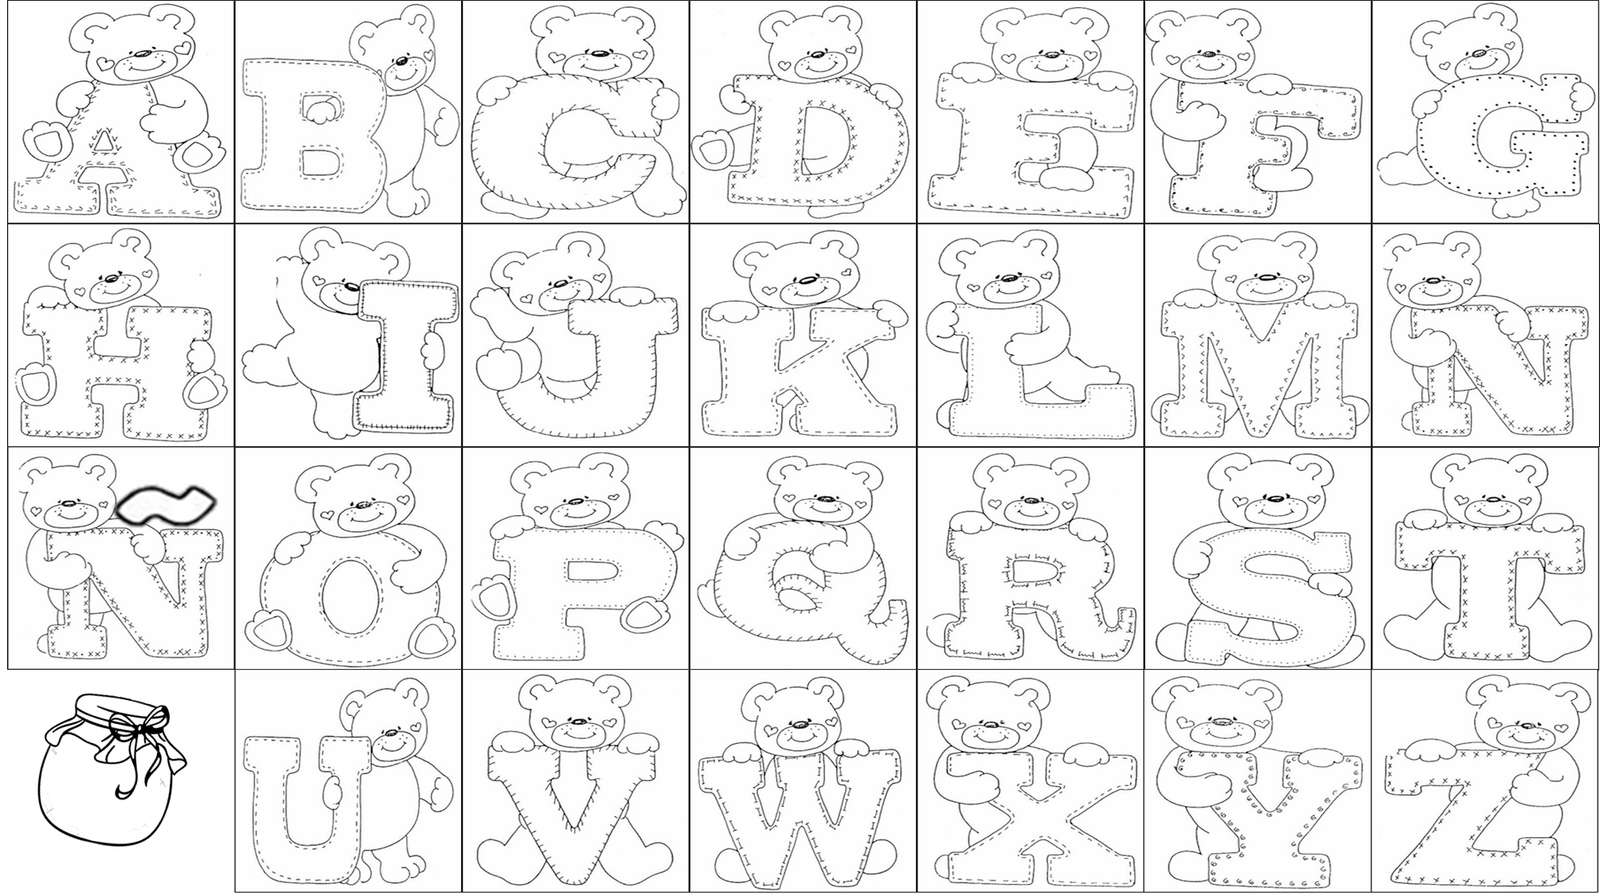 Alfabet puzzle online